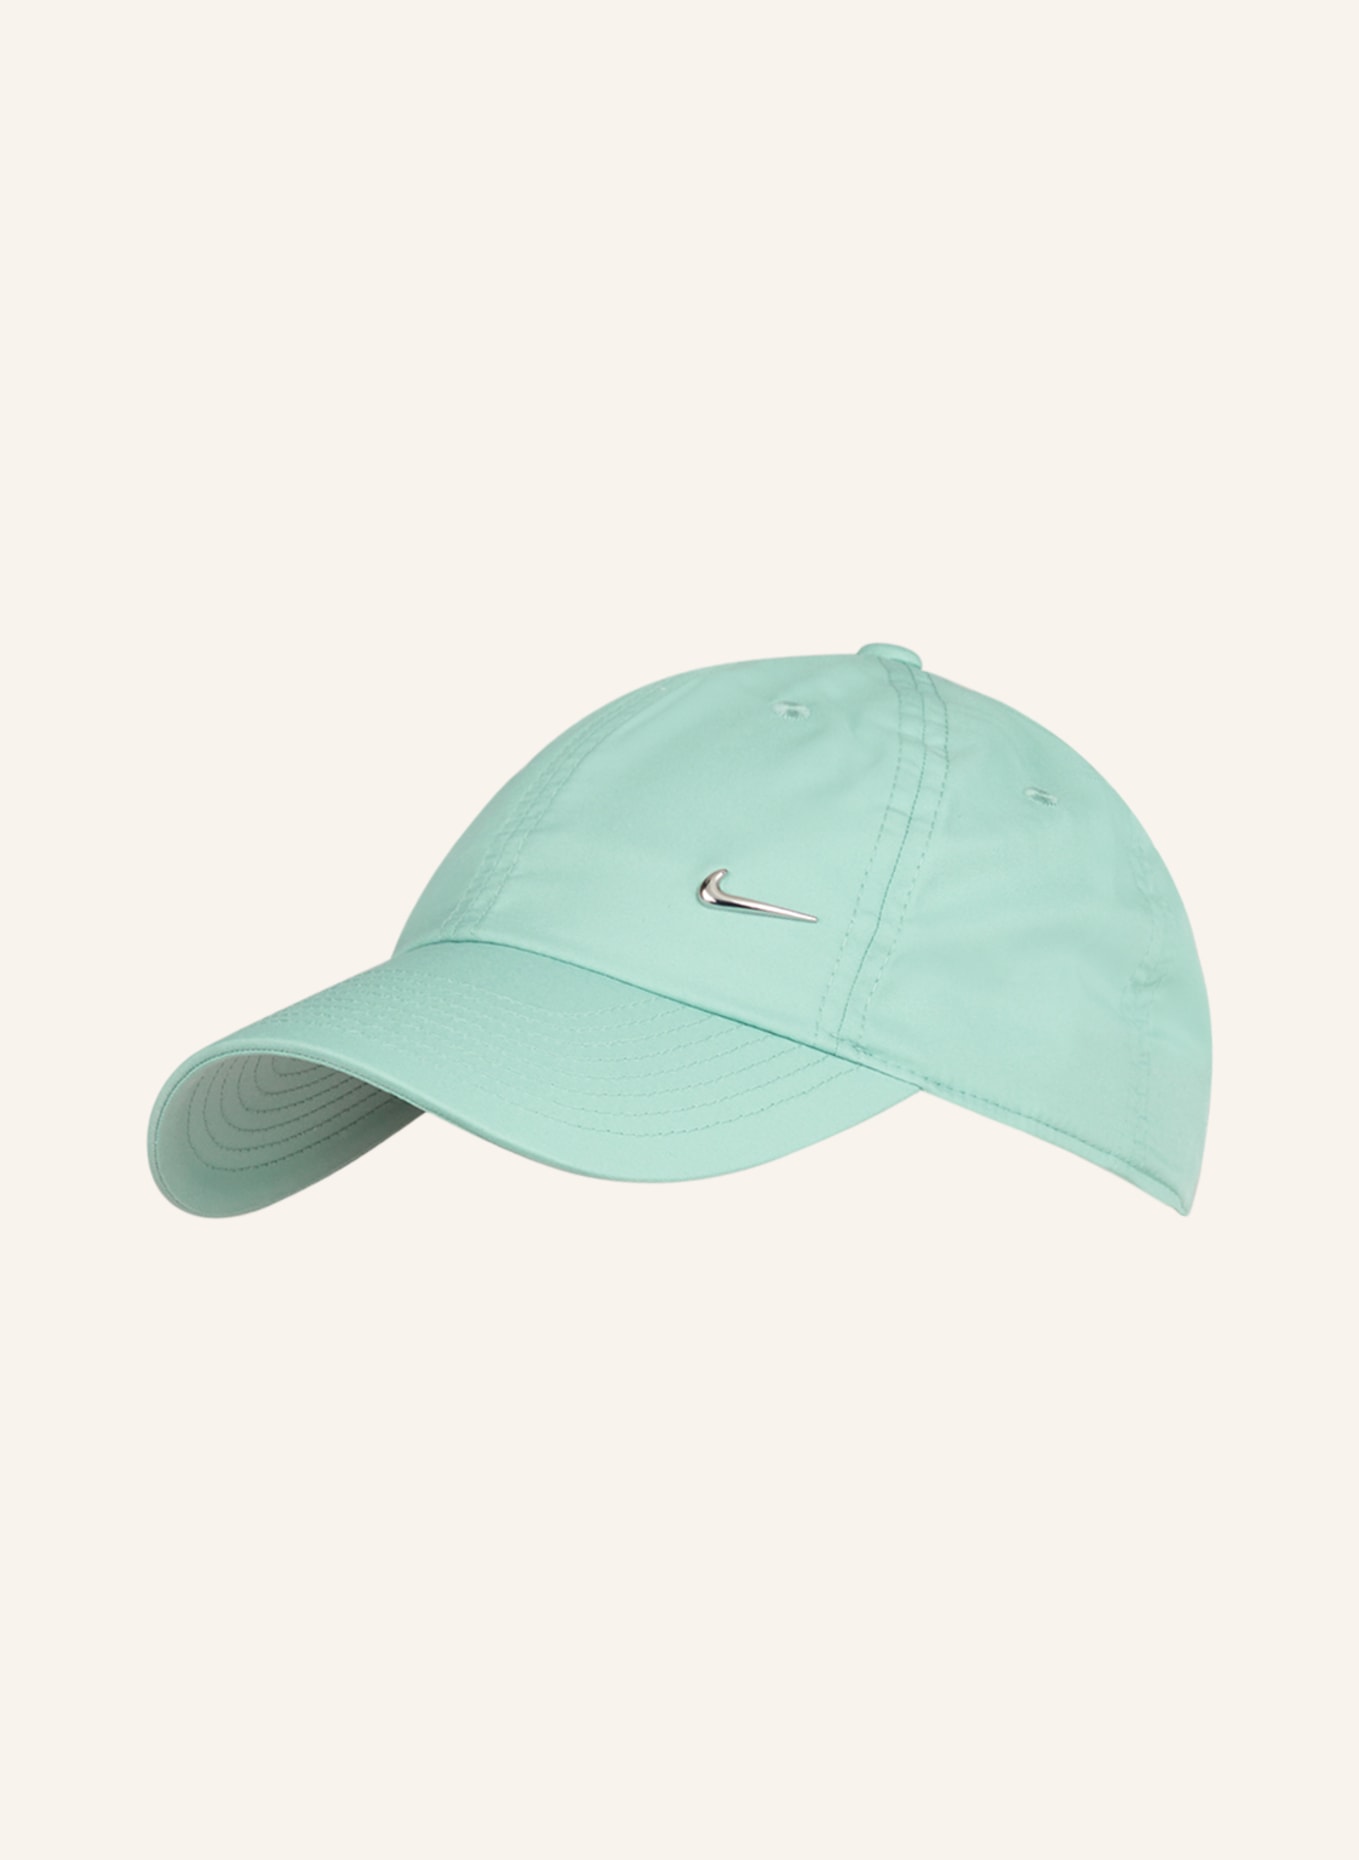 Nike Cap in mint